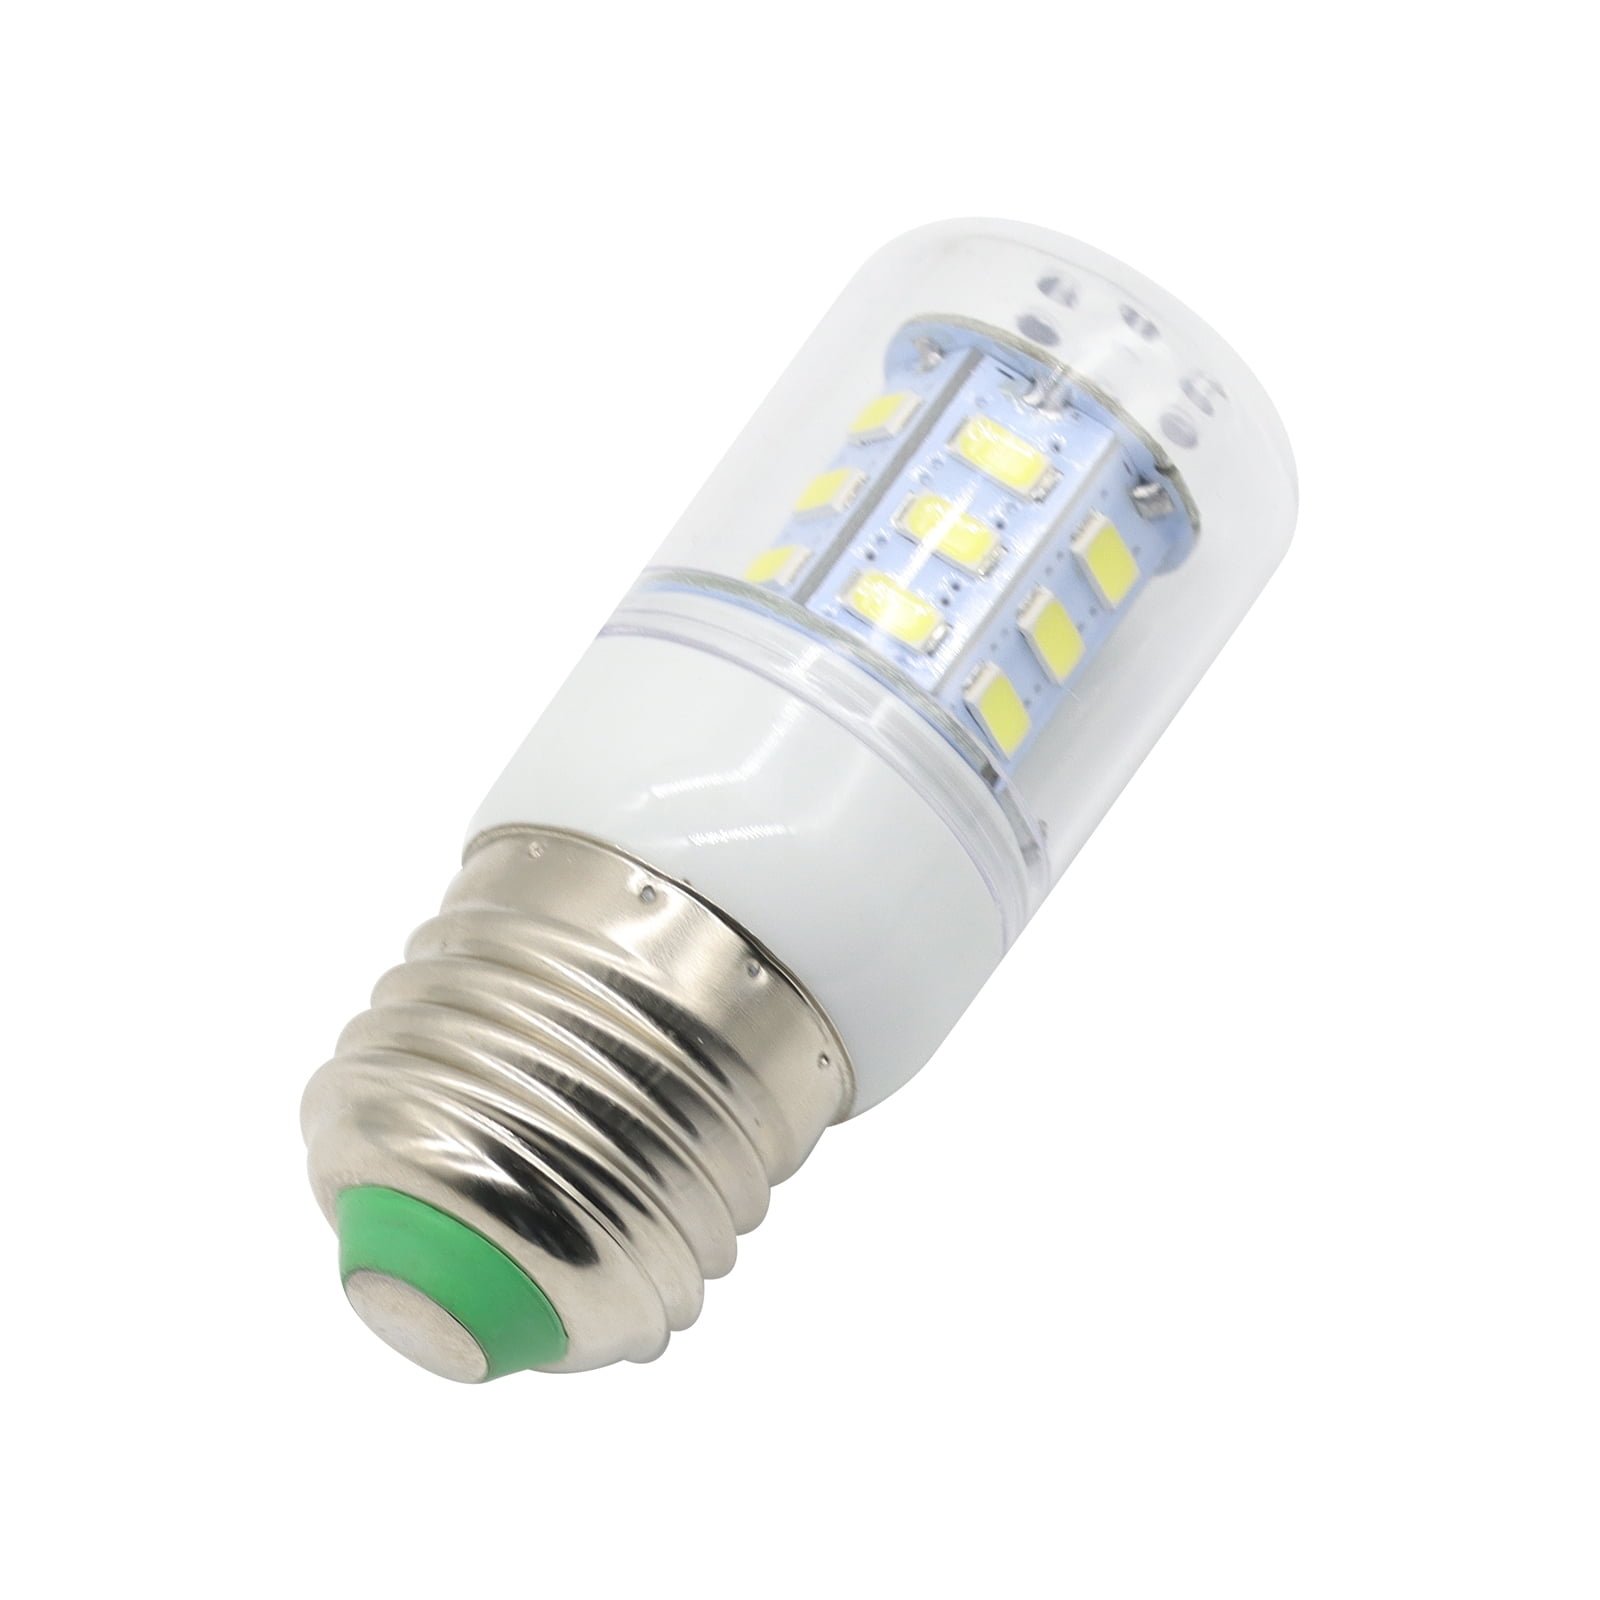 BOGDA 5304511738 LED Light Bulb Refrigerator Replace for